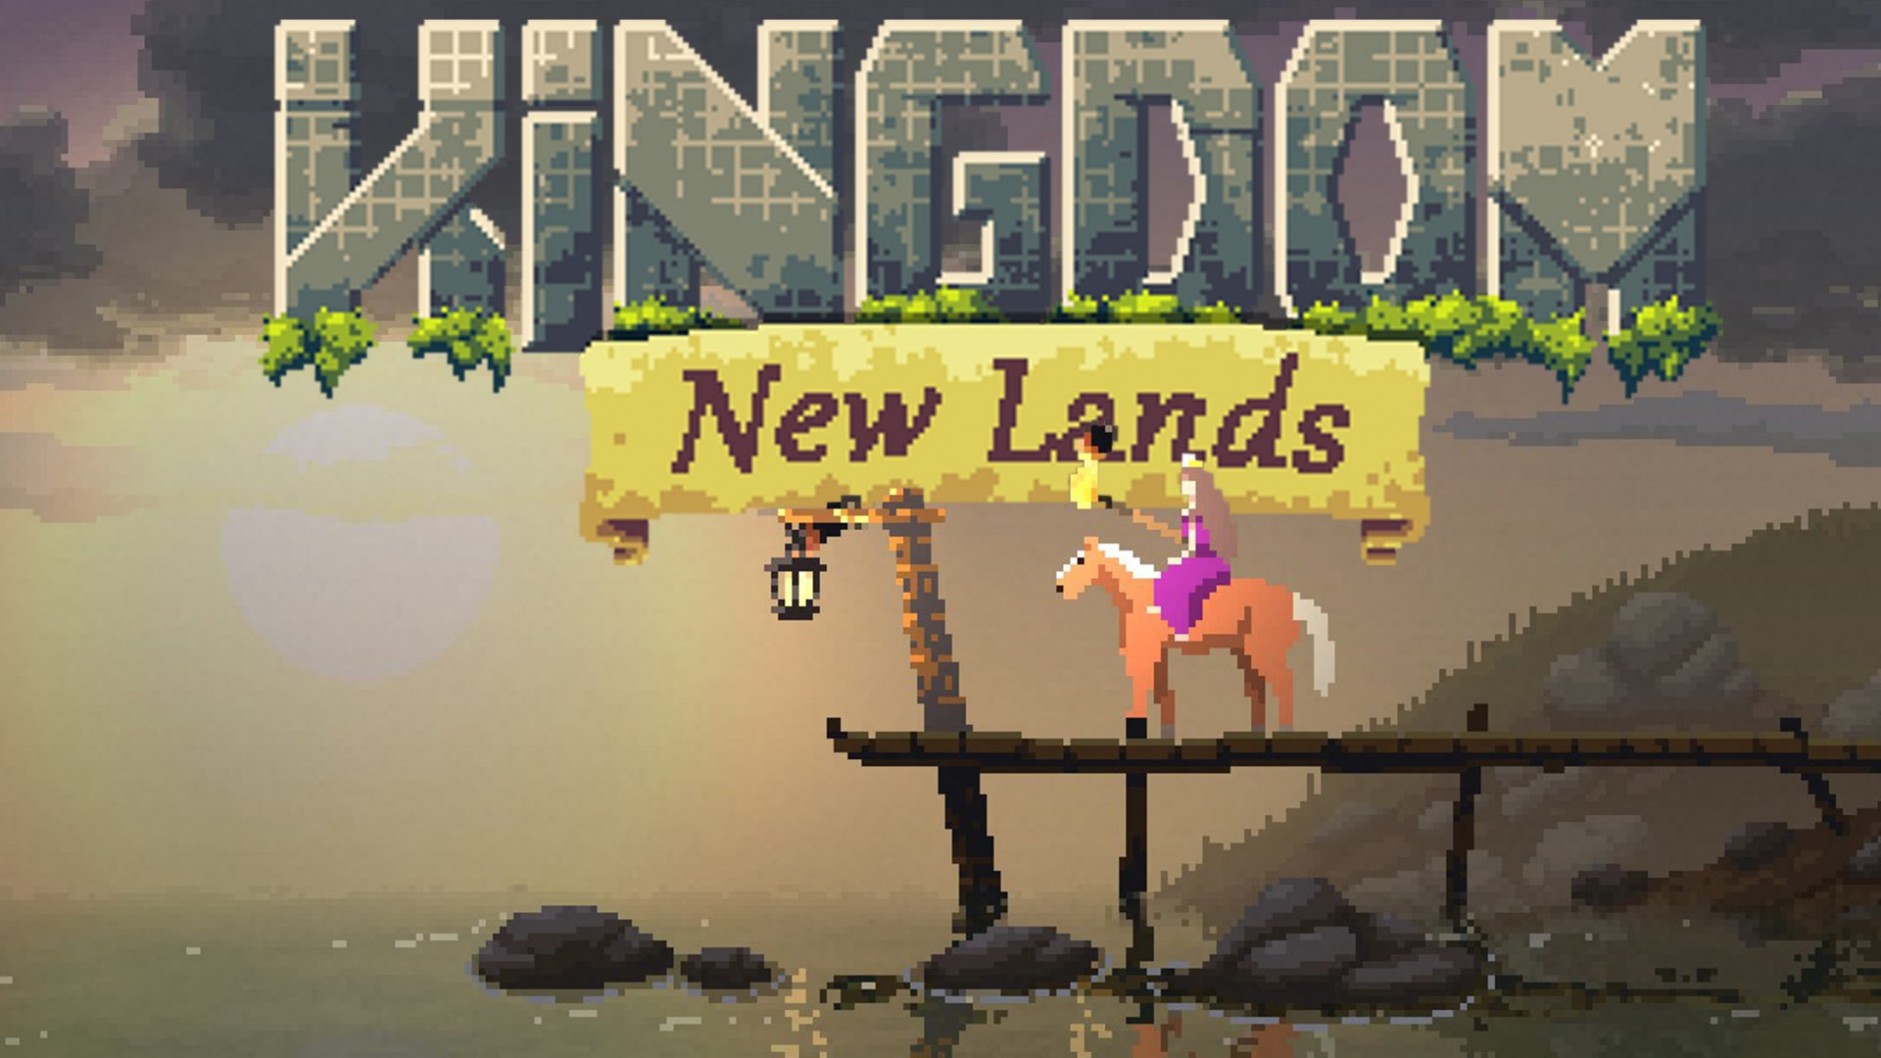 free for apple download Kingdom New Lands